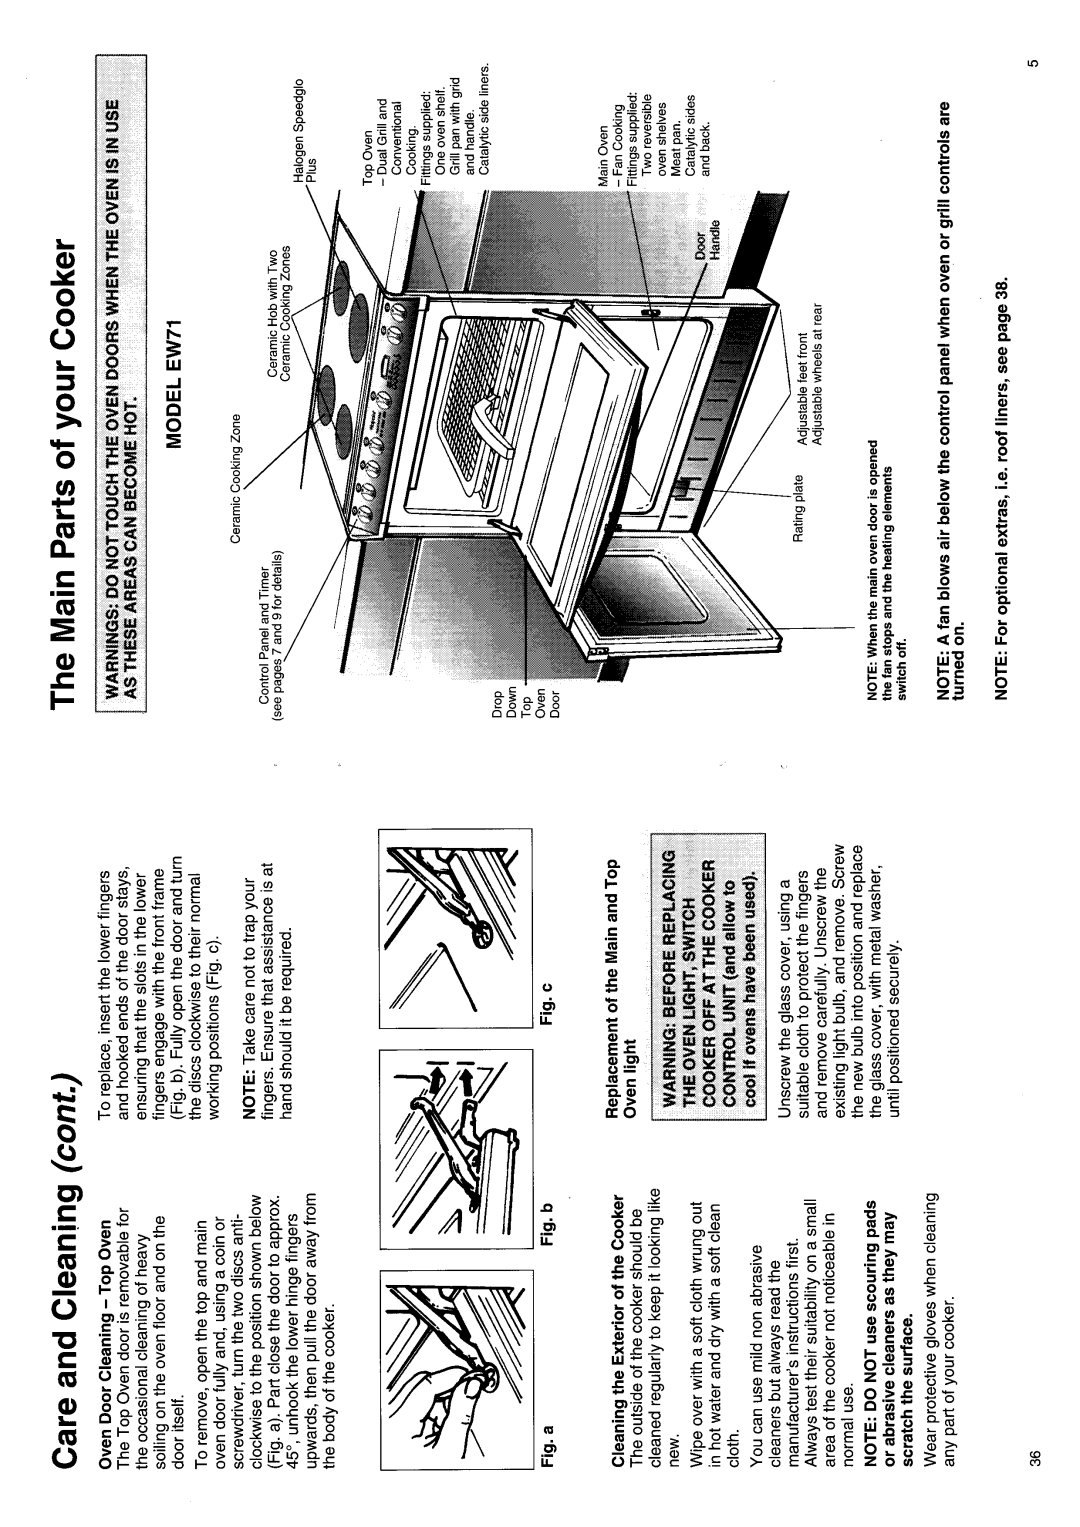 Hotpoint EW71 manual 